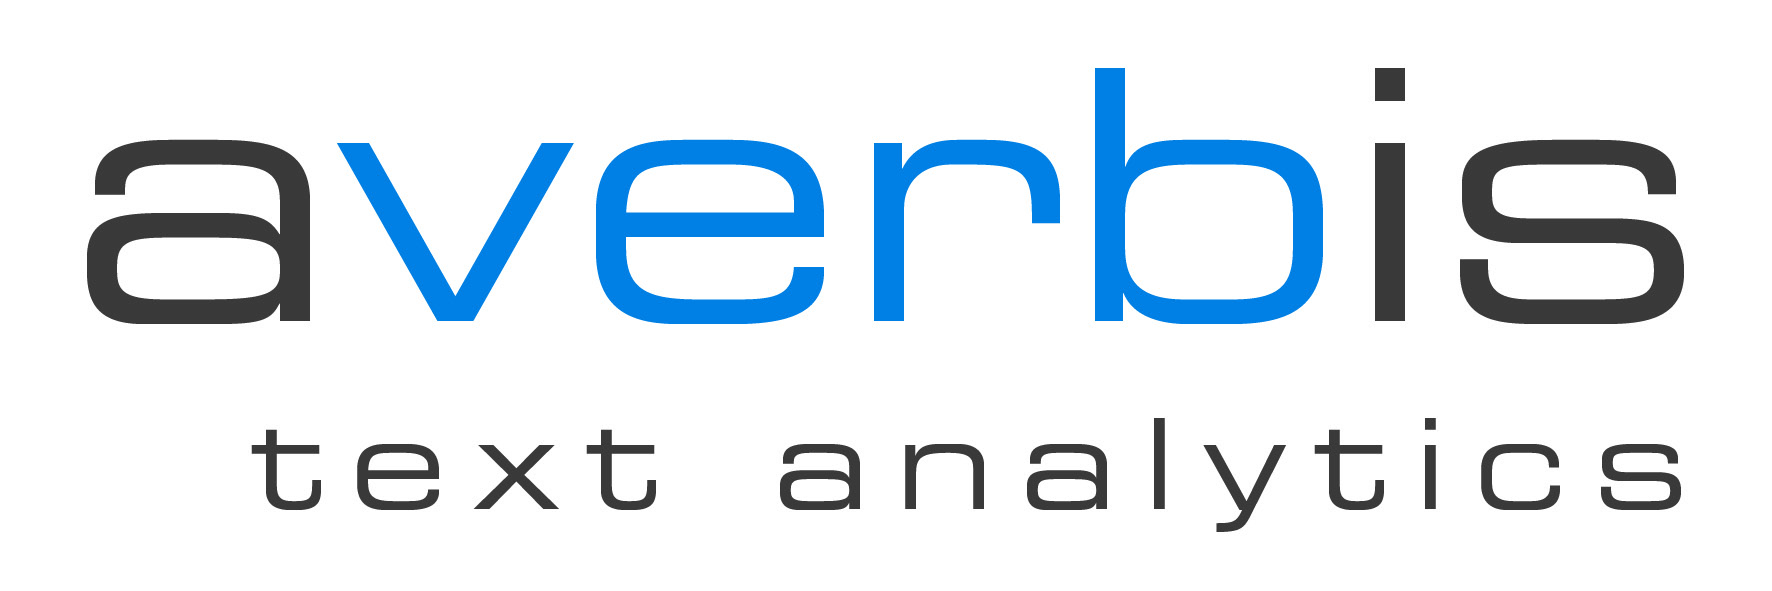 Averbis GmbH